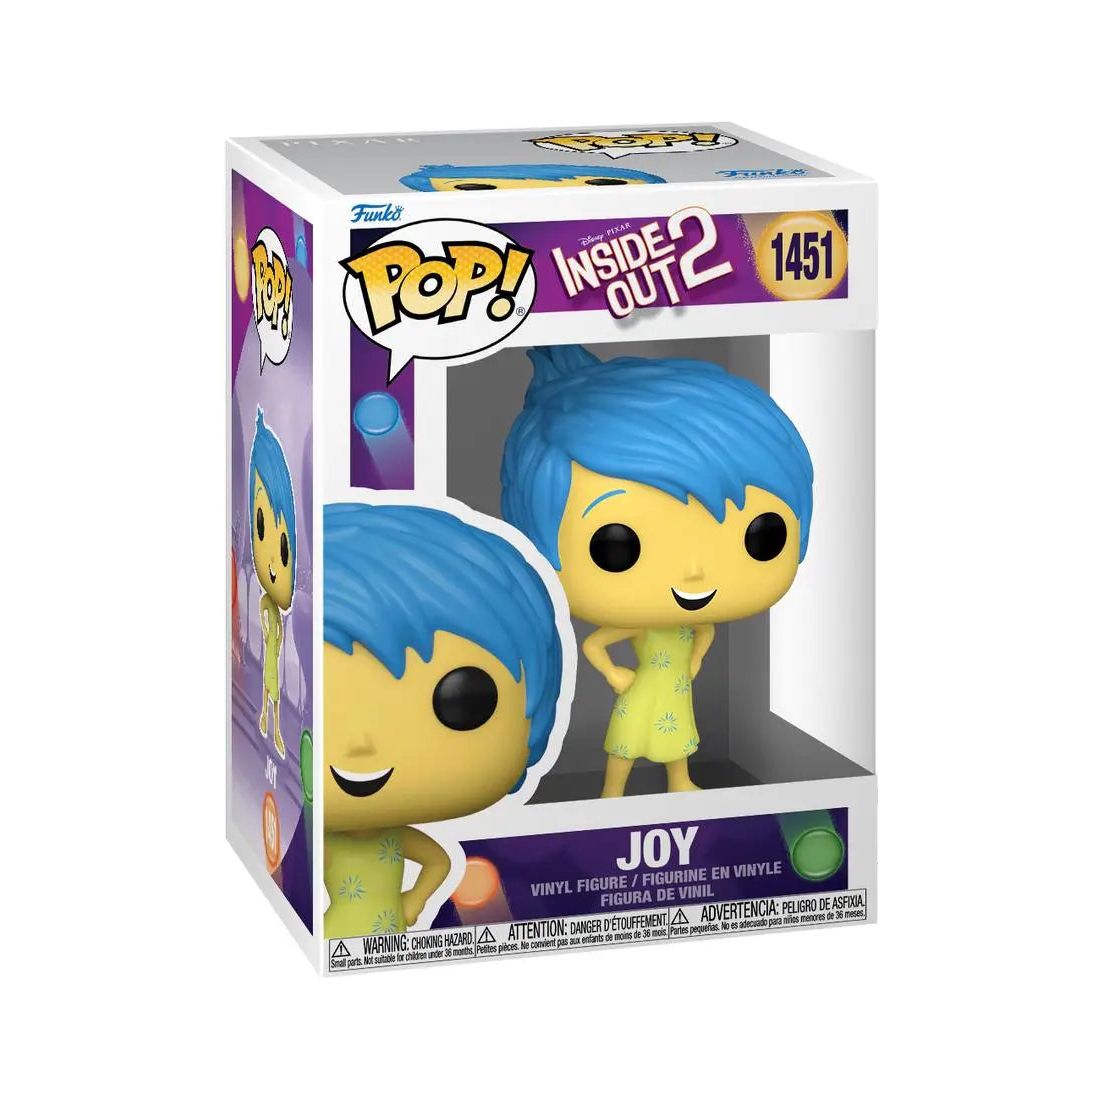 Funko Pop! Disney Pixar Inside Out 2 1451 Joy Funko